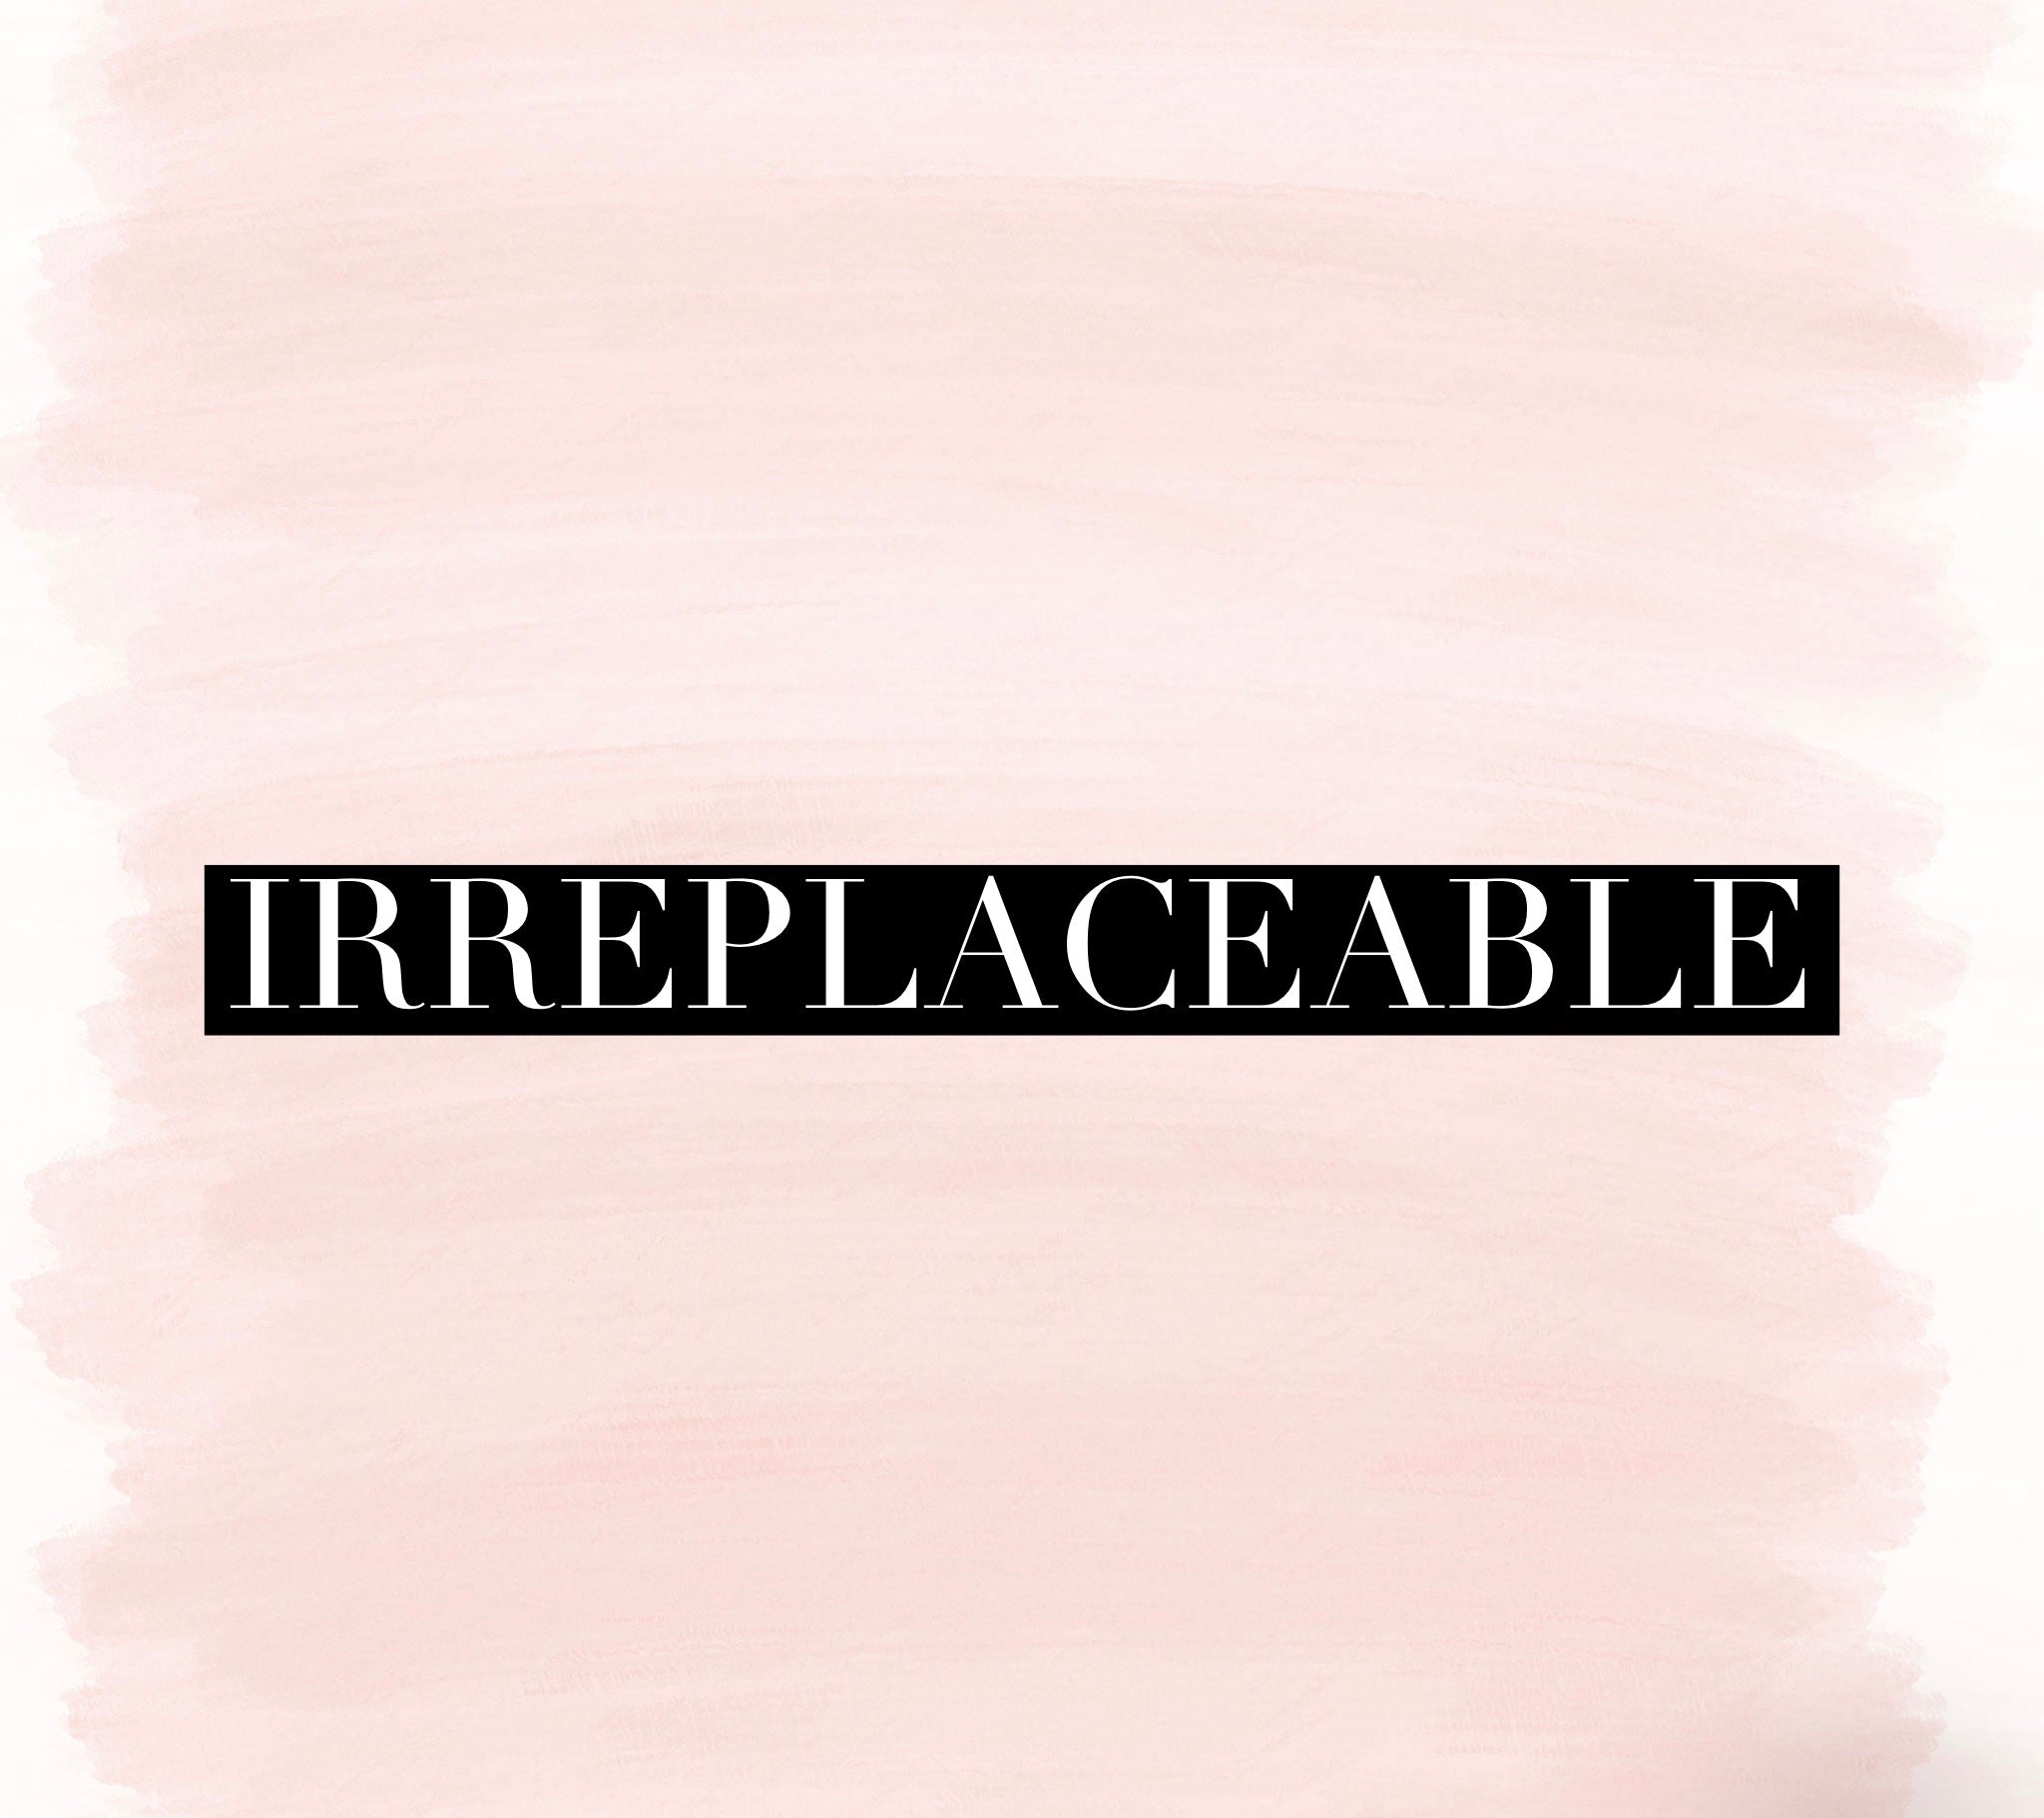 Irreplaceable (Special Order)